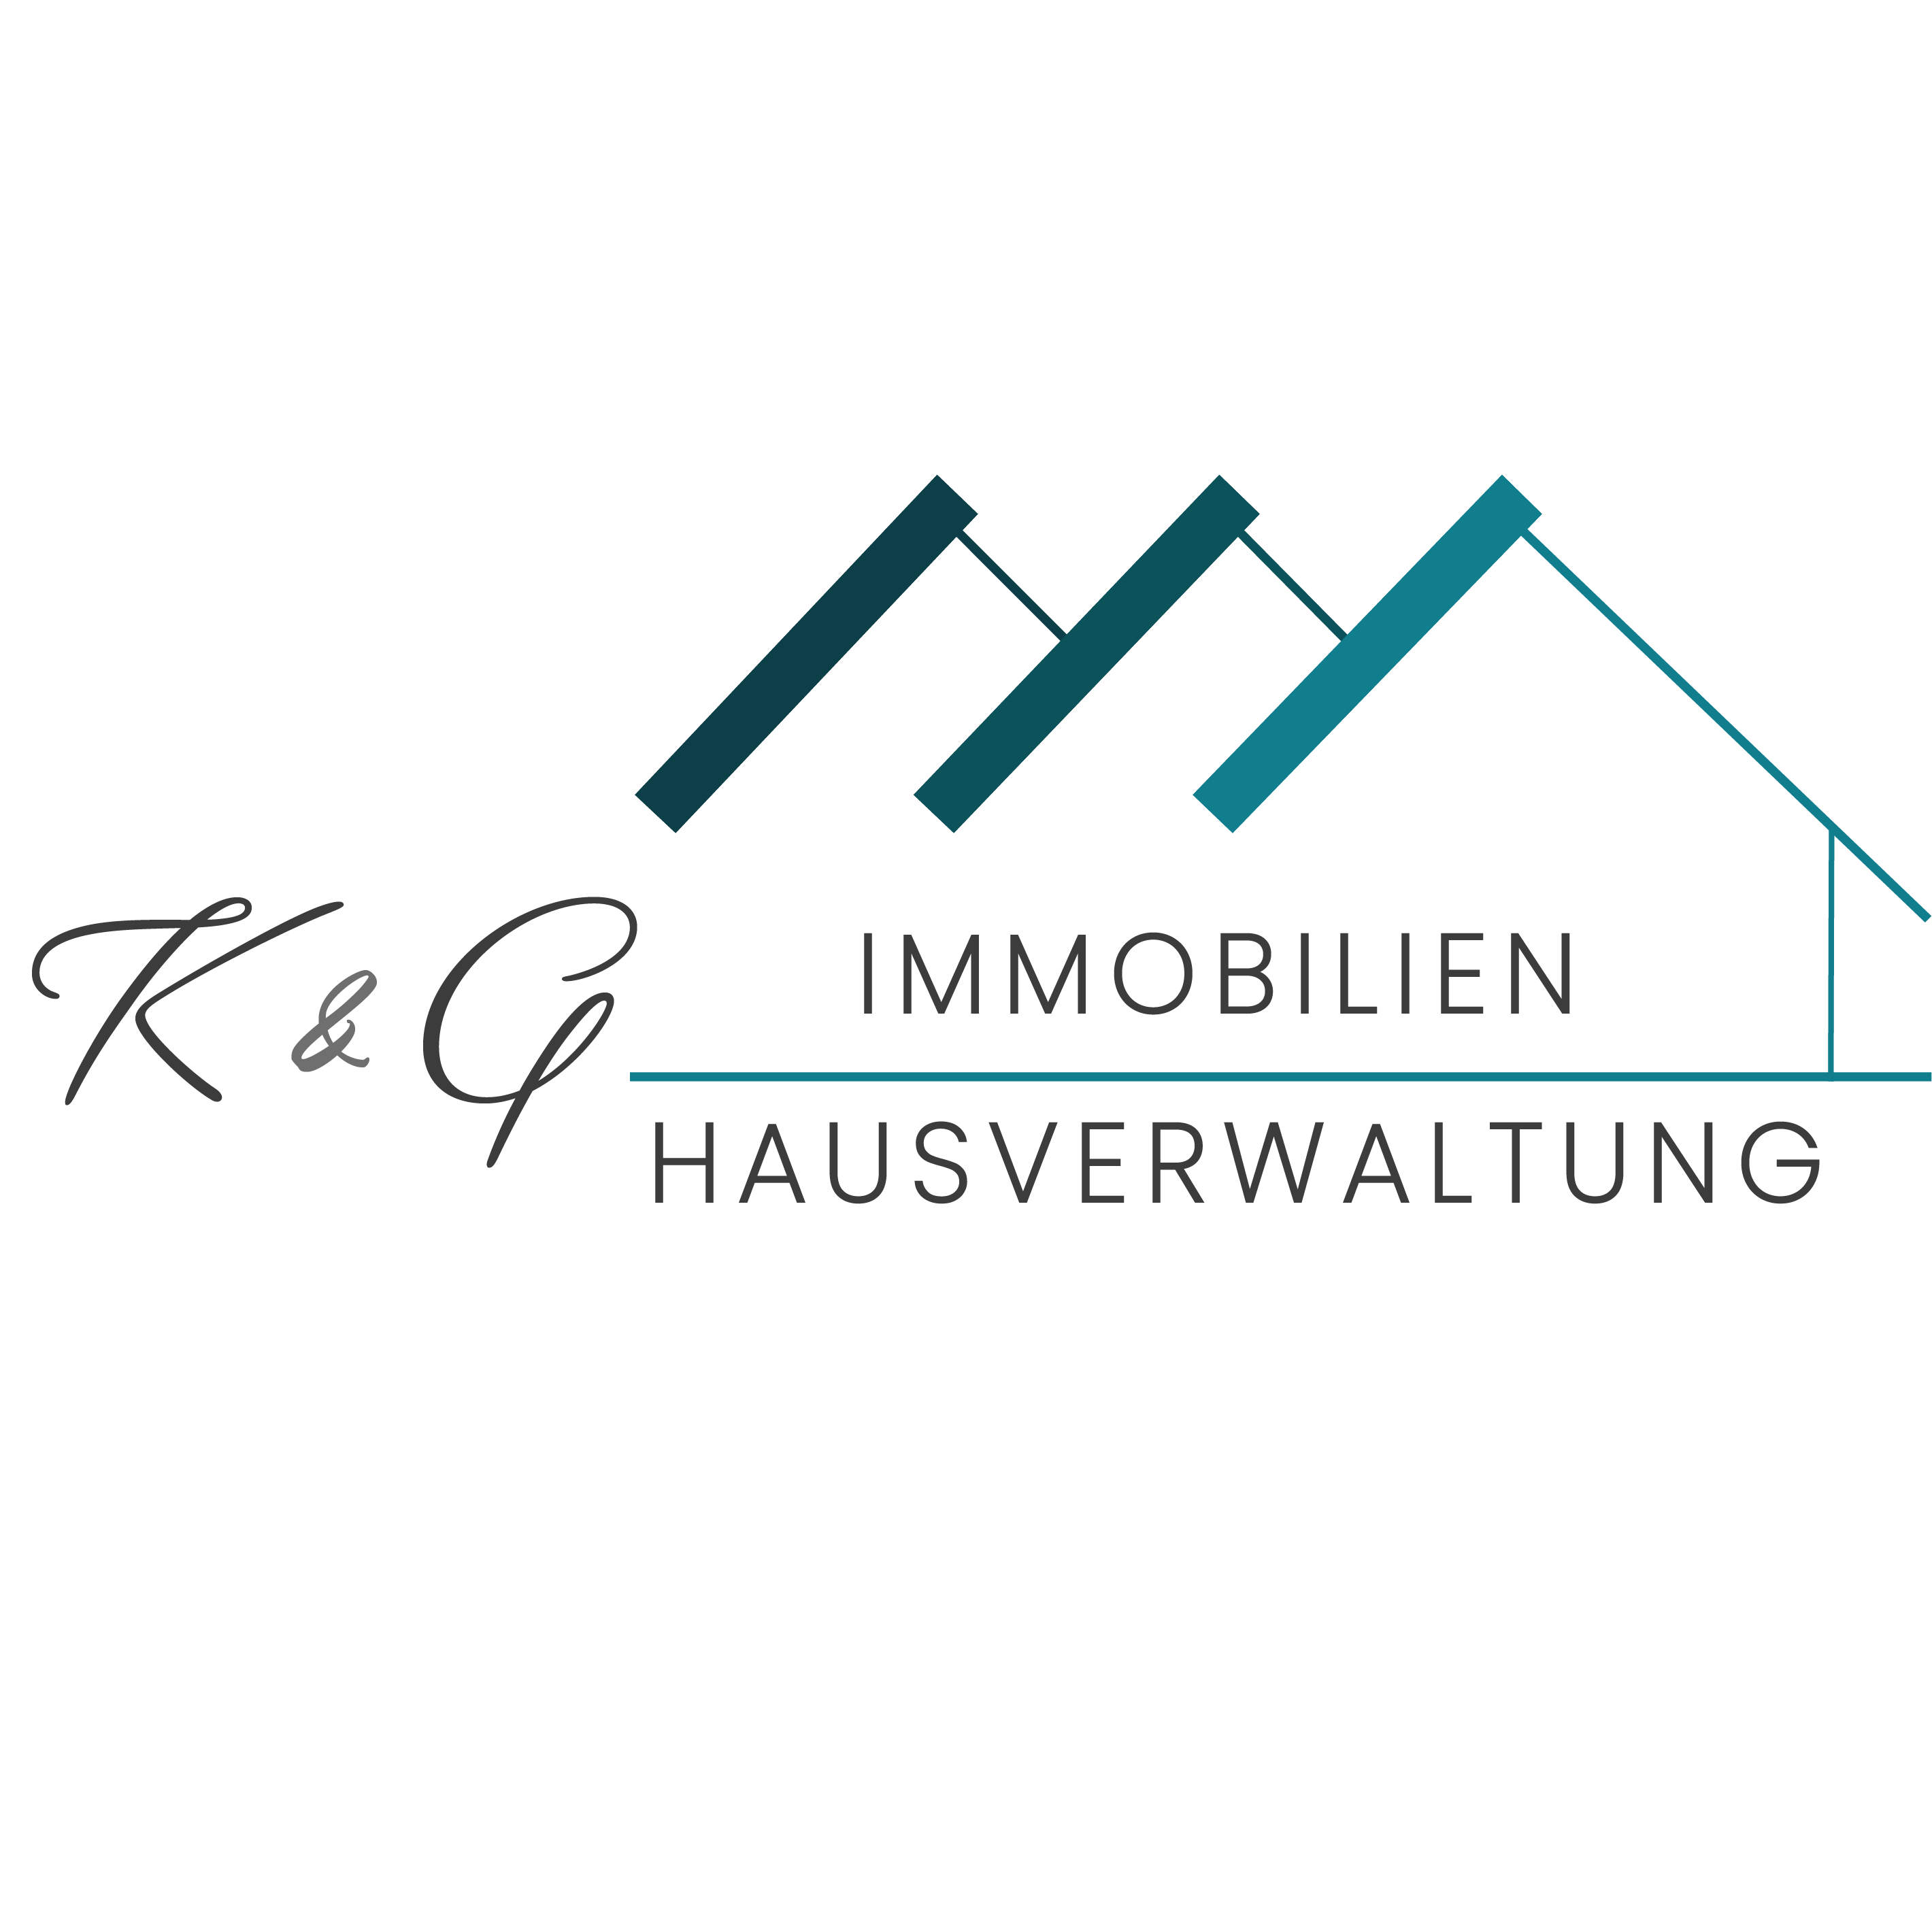 K&G Immobilien & Hausverwaltung OHG in Paderborn - Logo